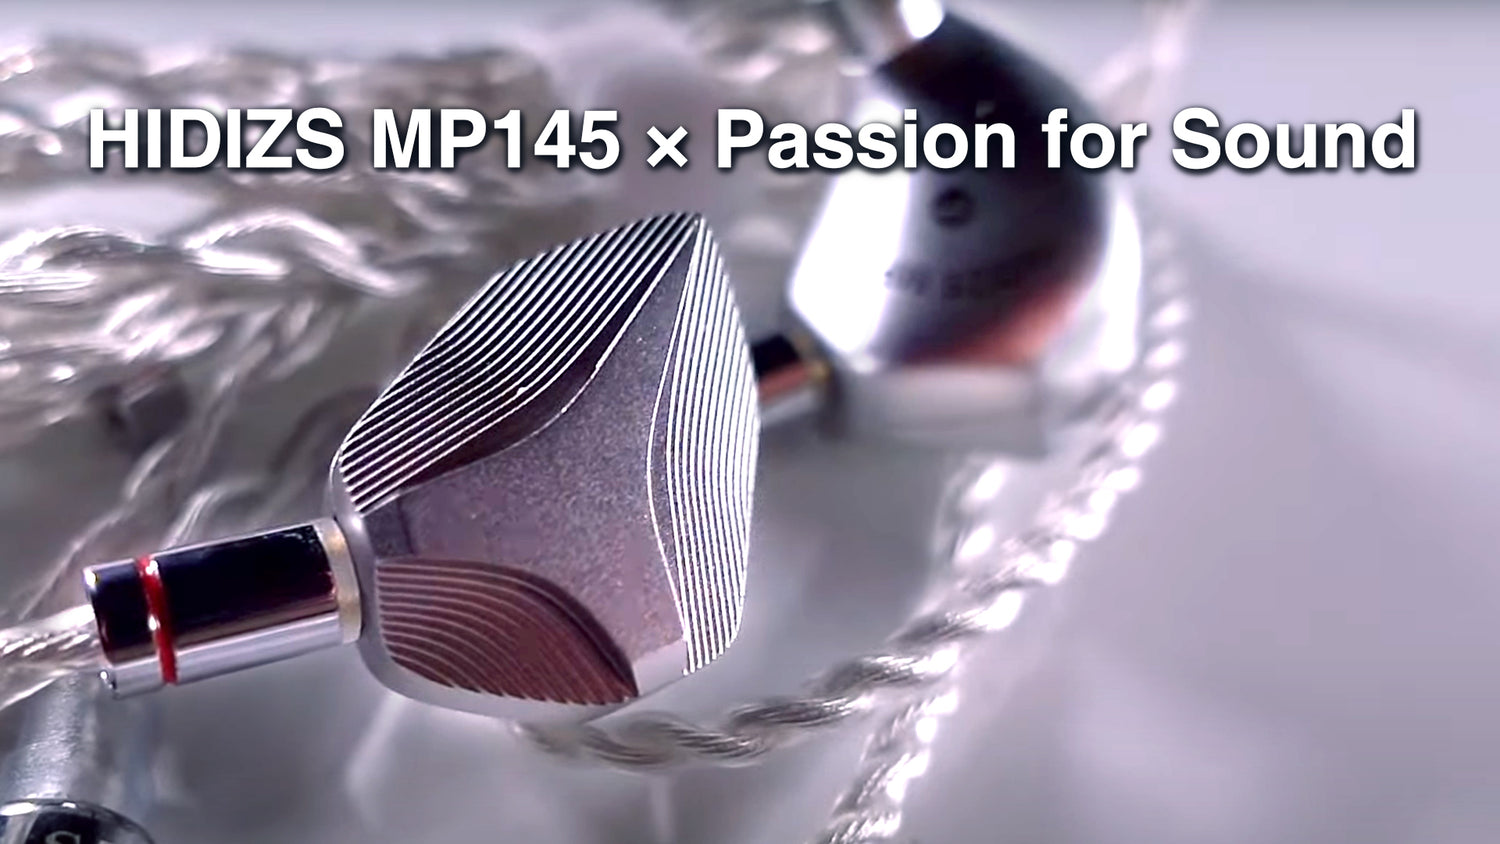 HIDIZS MP145 Review - Passion for Sound